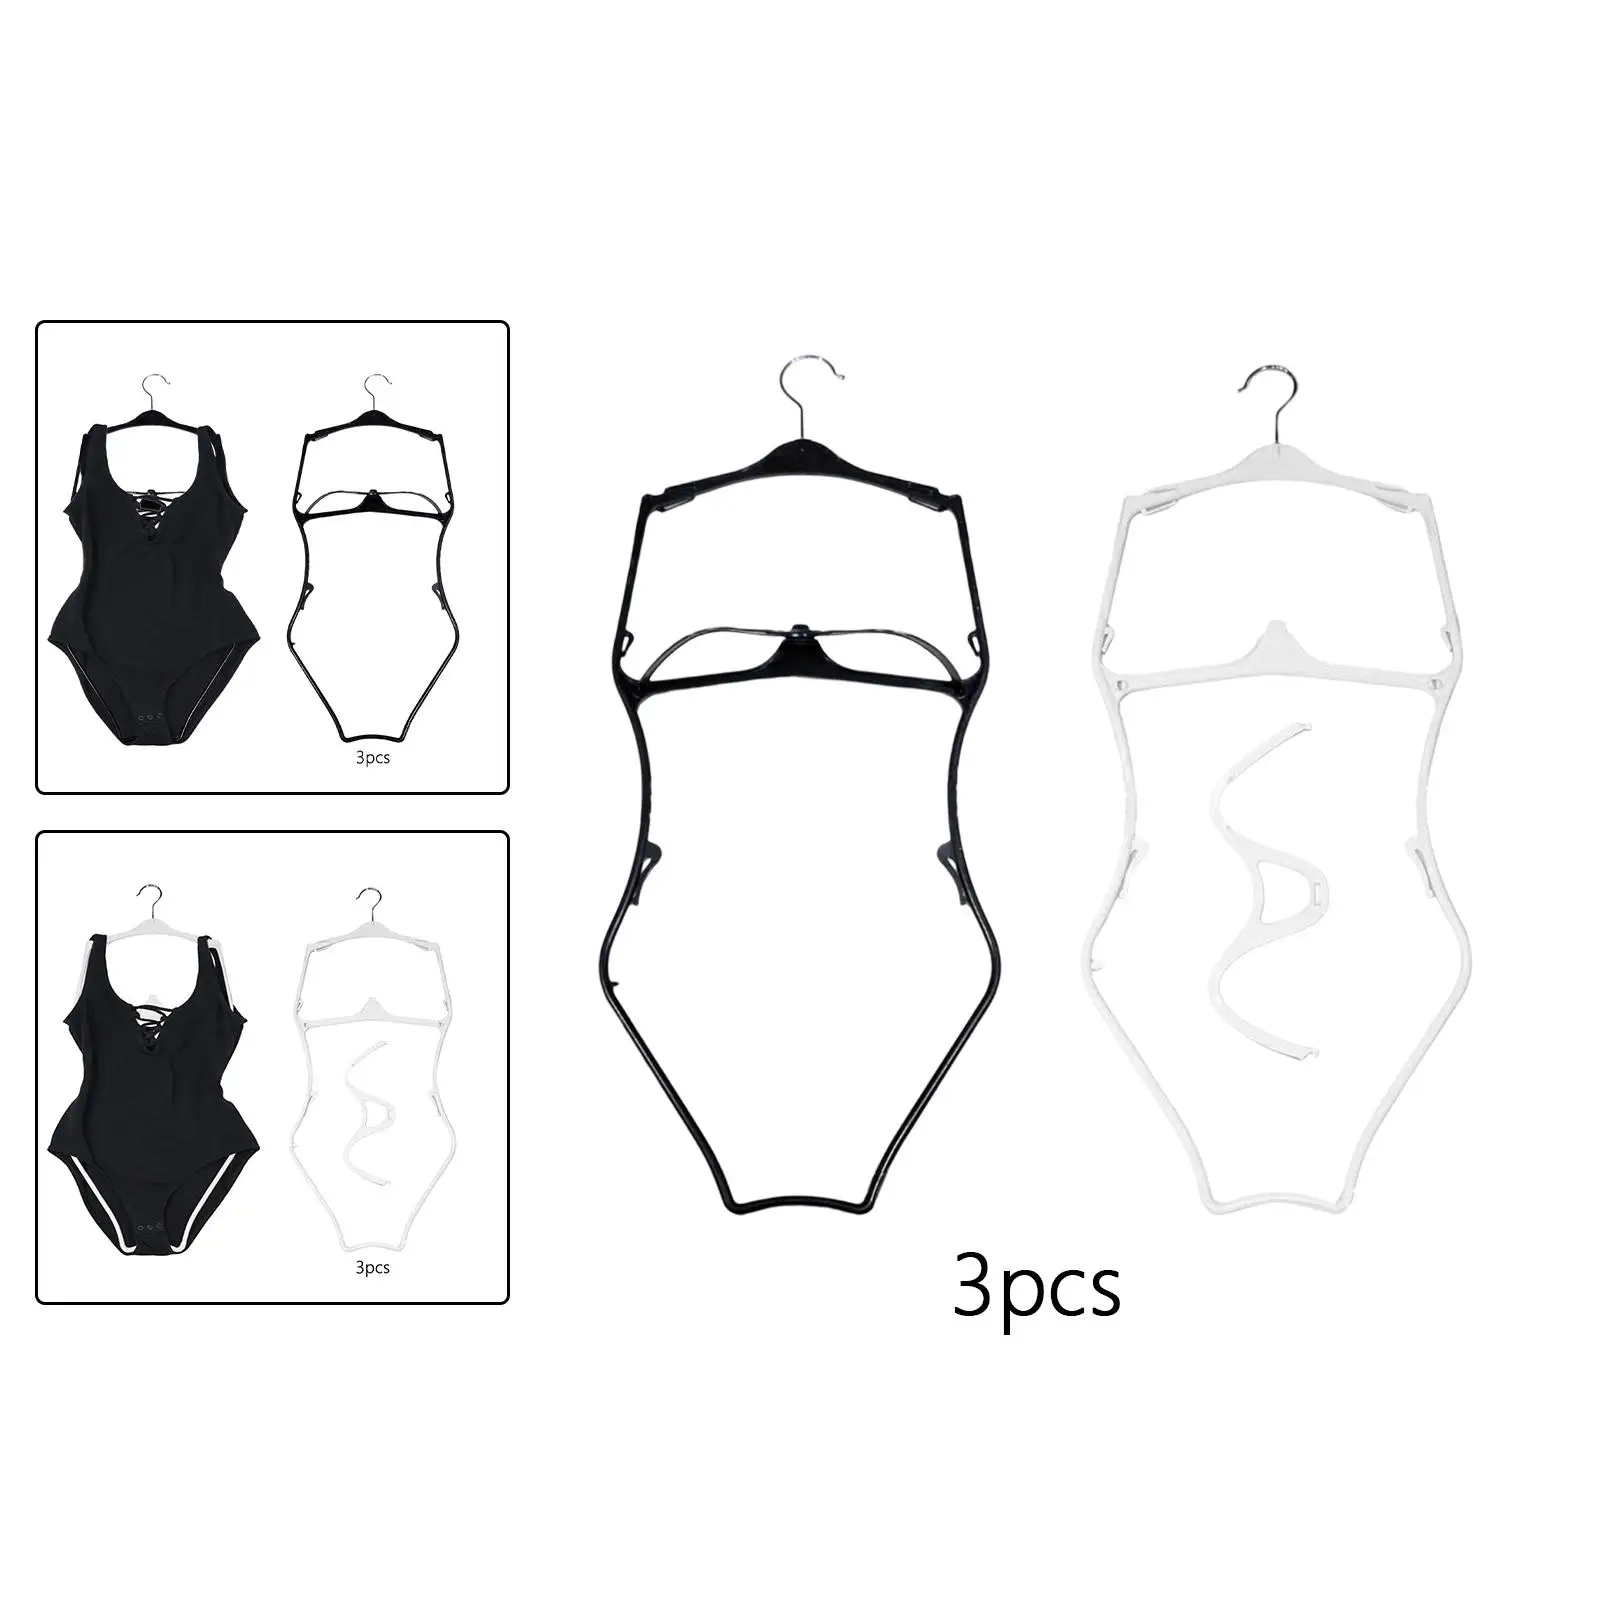 3Pcs Swimsuit Hangers Hanging Rack Holder Body Shape Bikini Hanger Bikini Hangers for Robes Scarves Sleepwear Dresses Belts